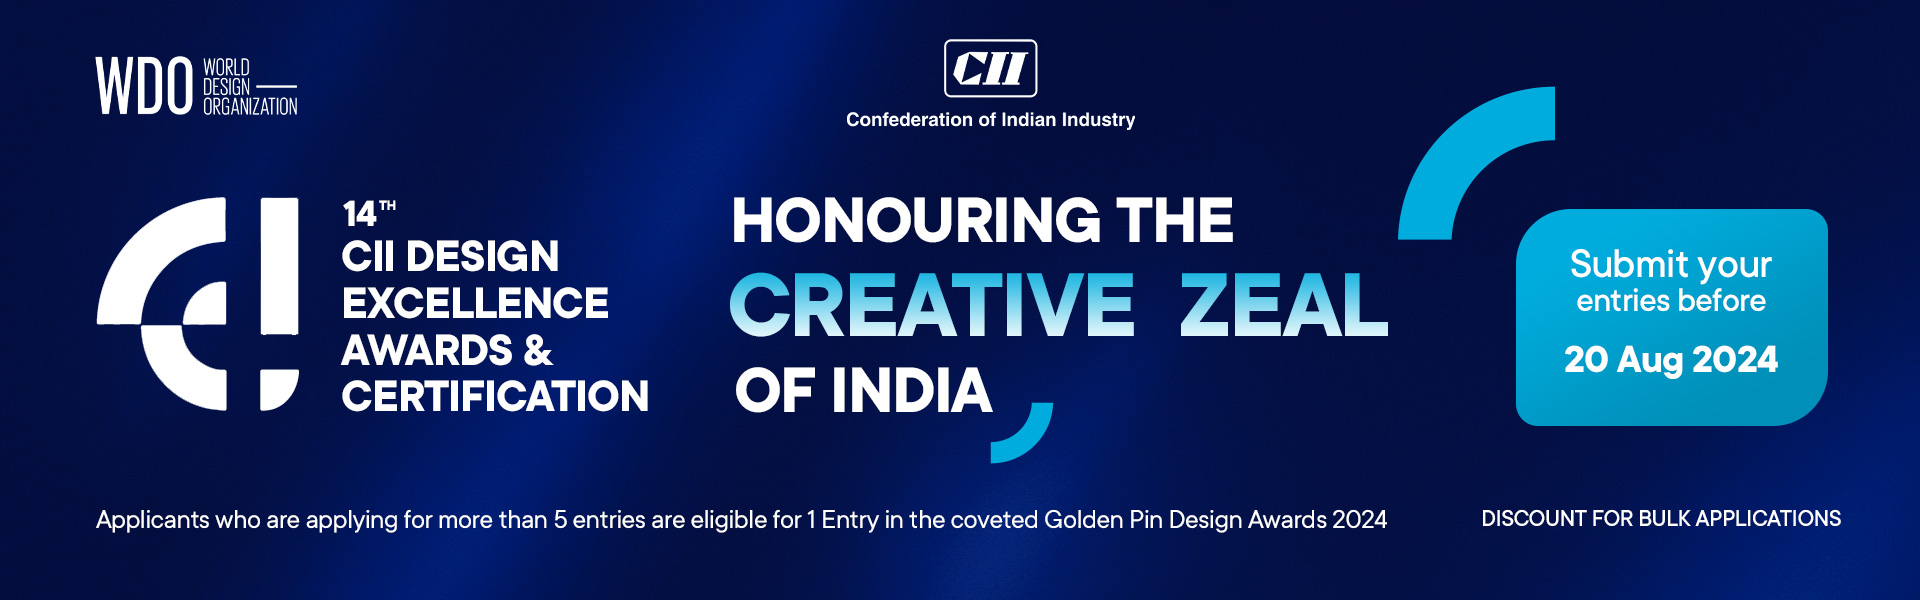 cii-design-excellence-awards-2024